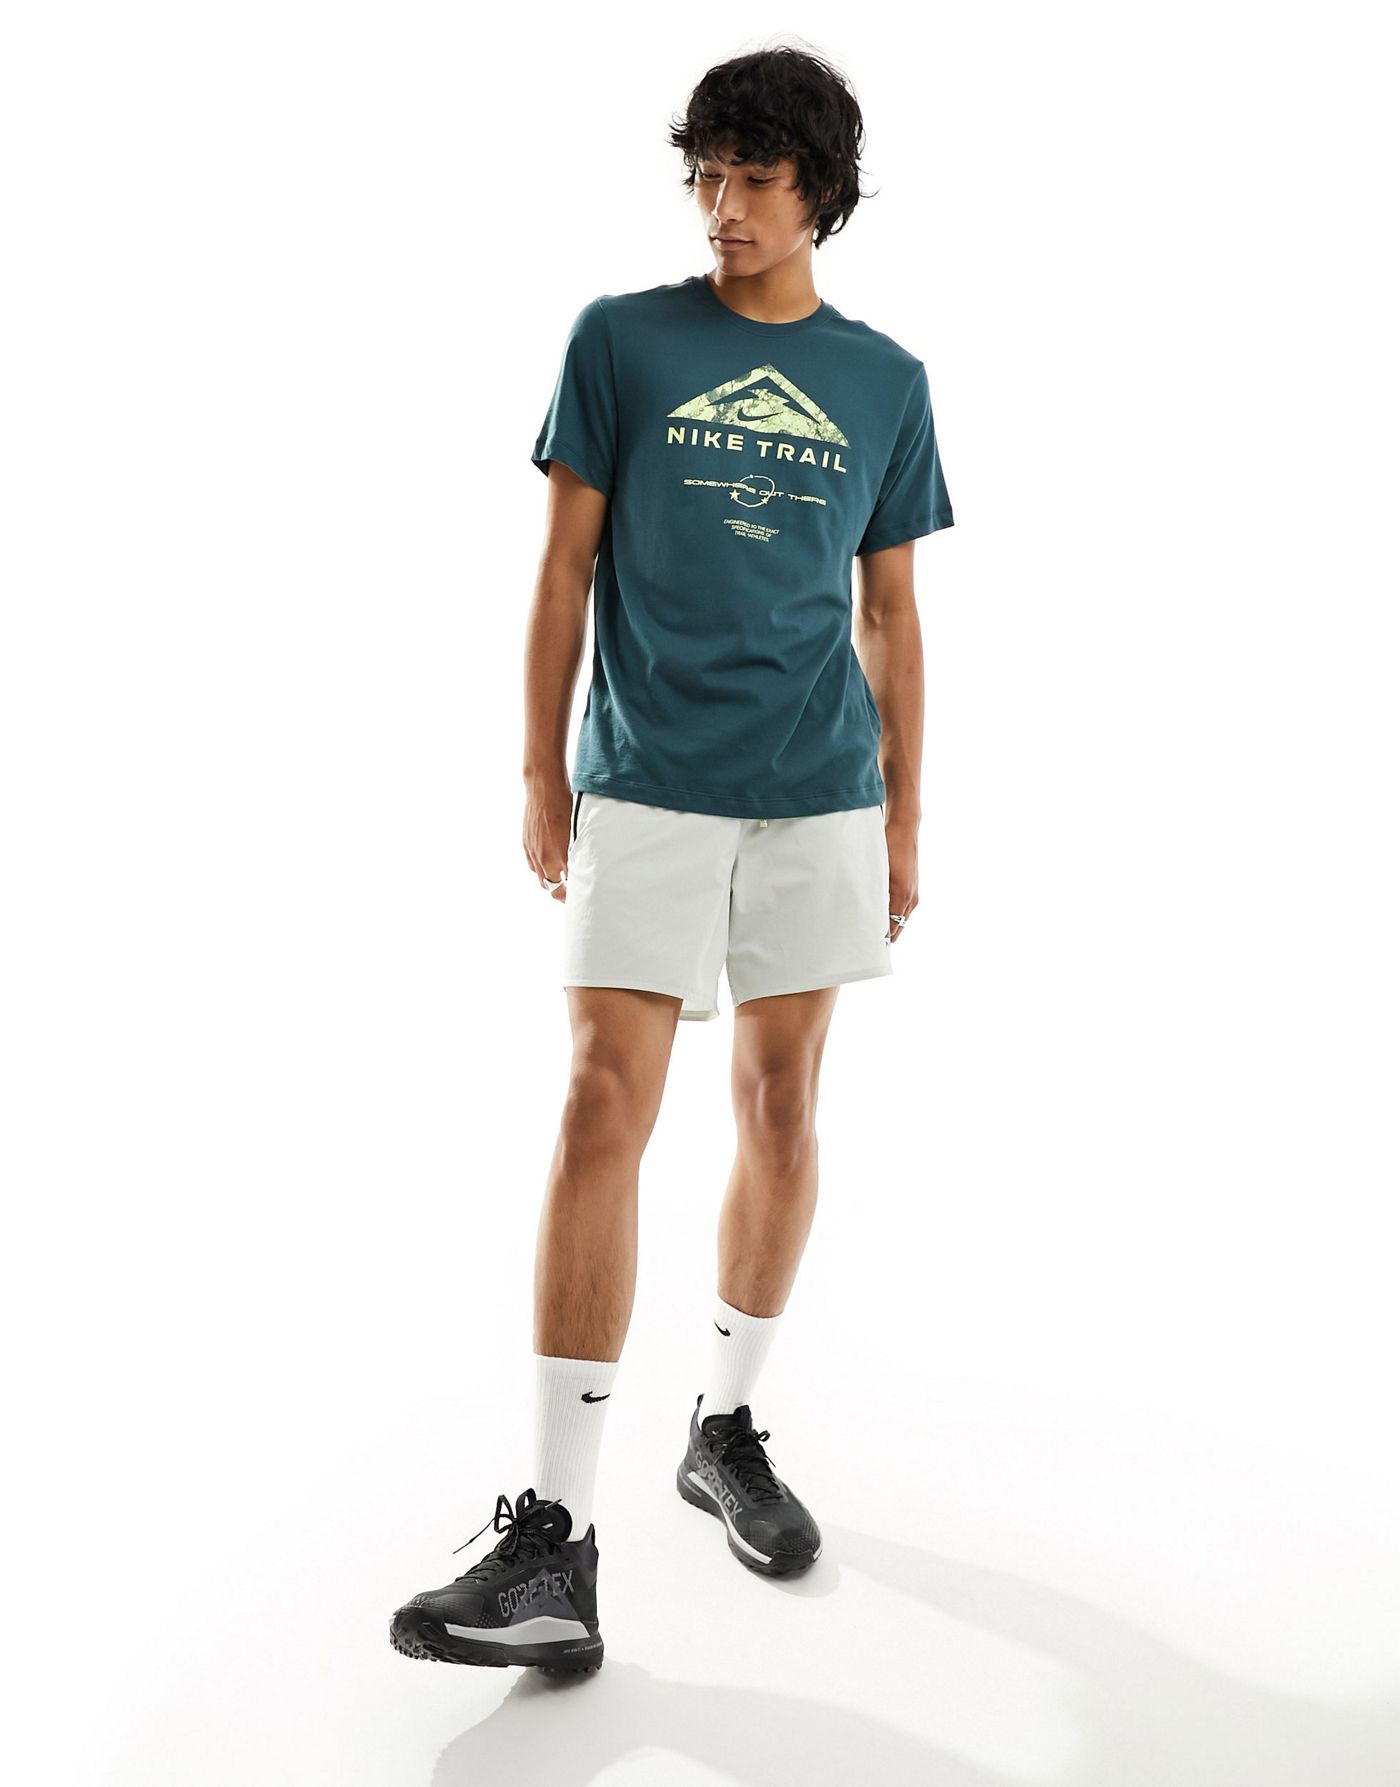 Nike Running Trail Dri-FIT graphic t-shirt in dark green